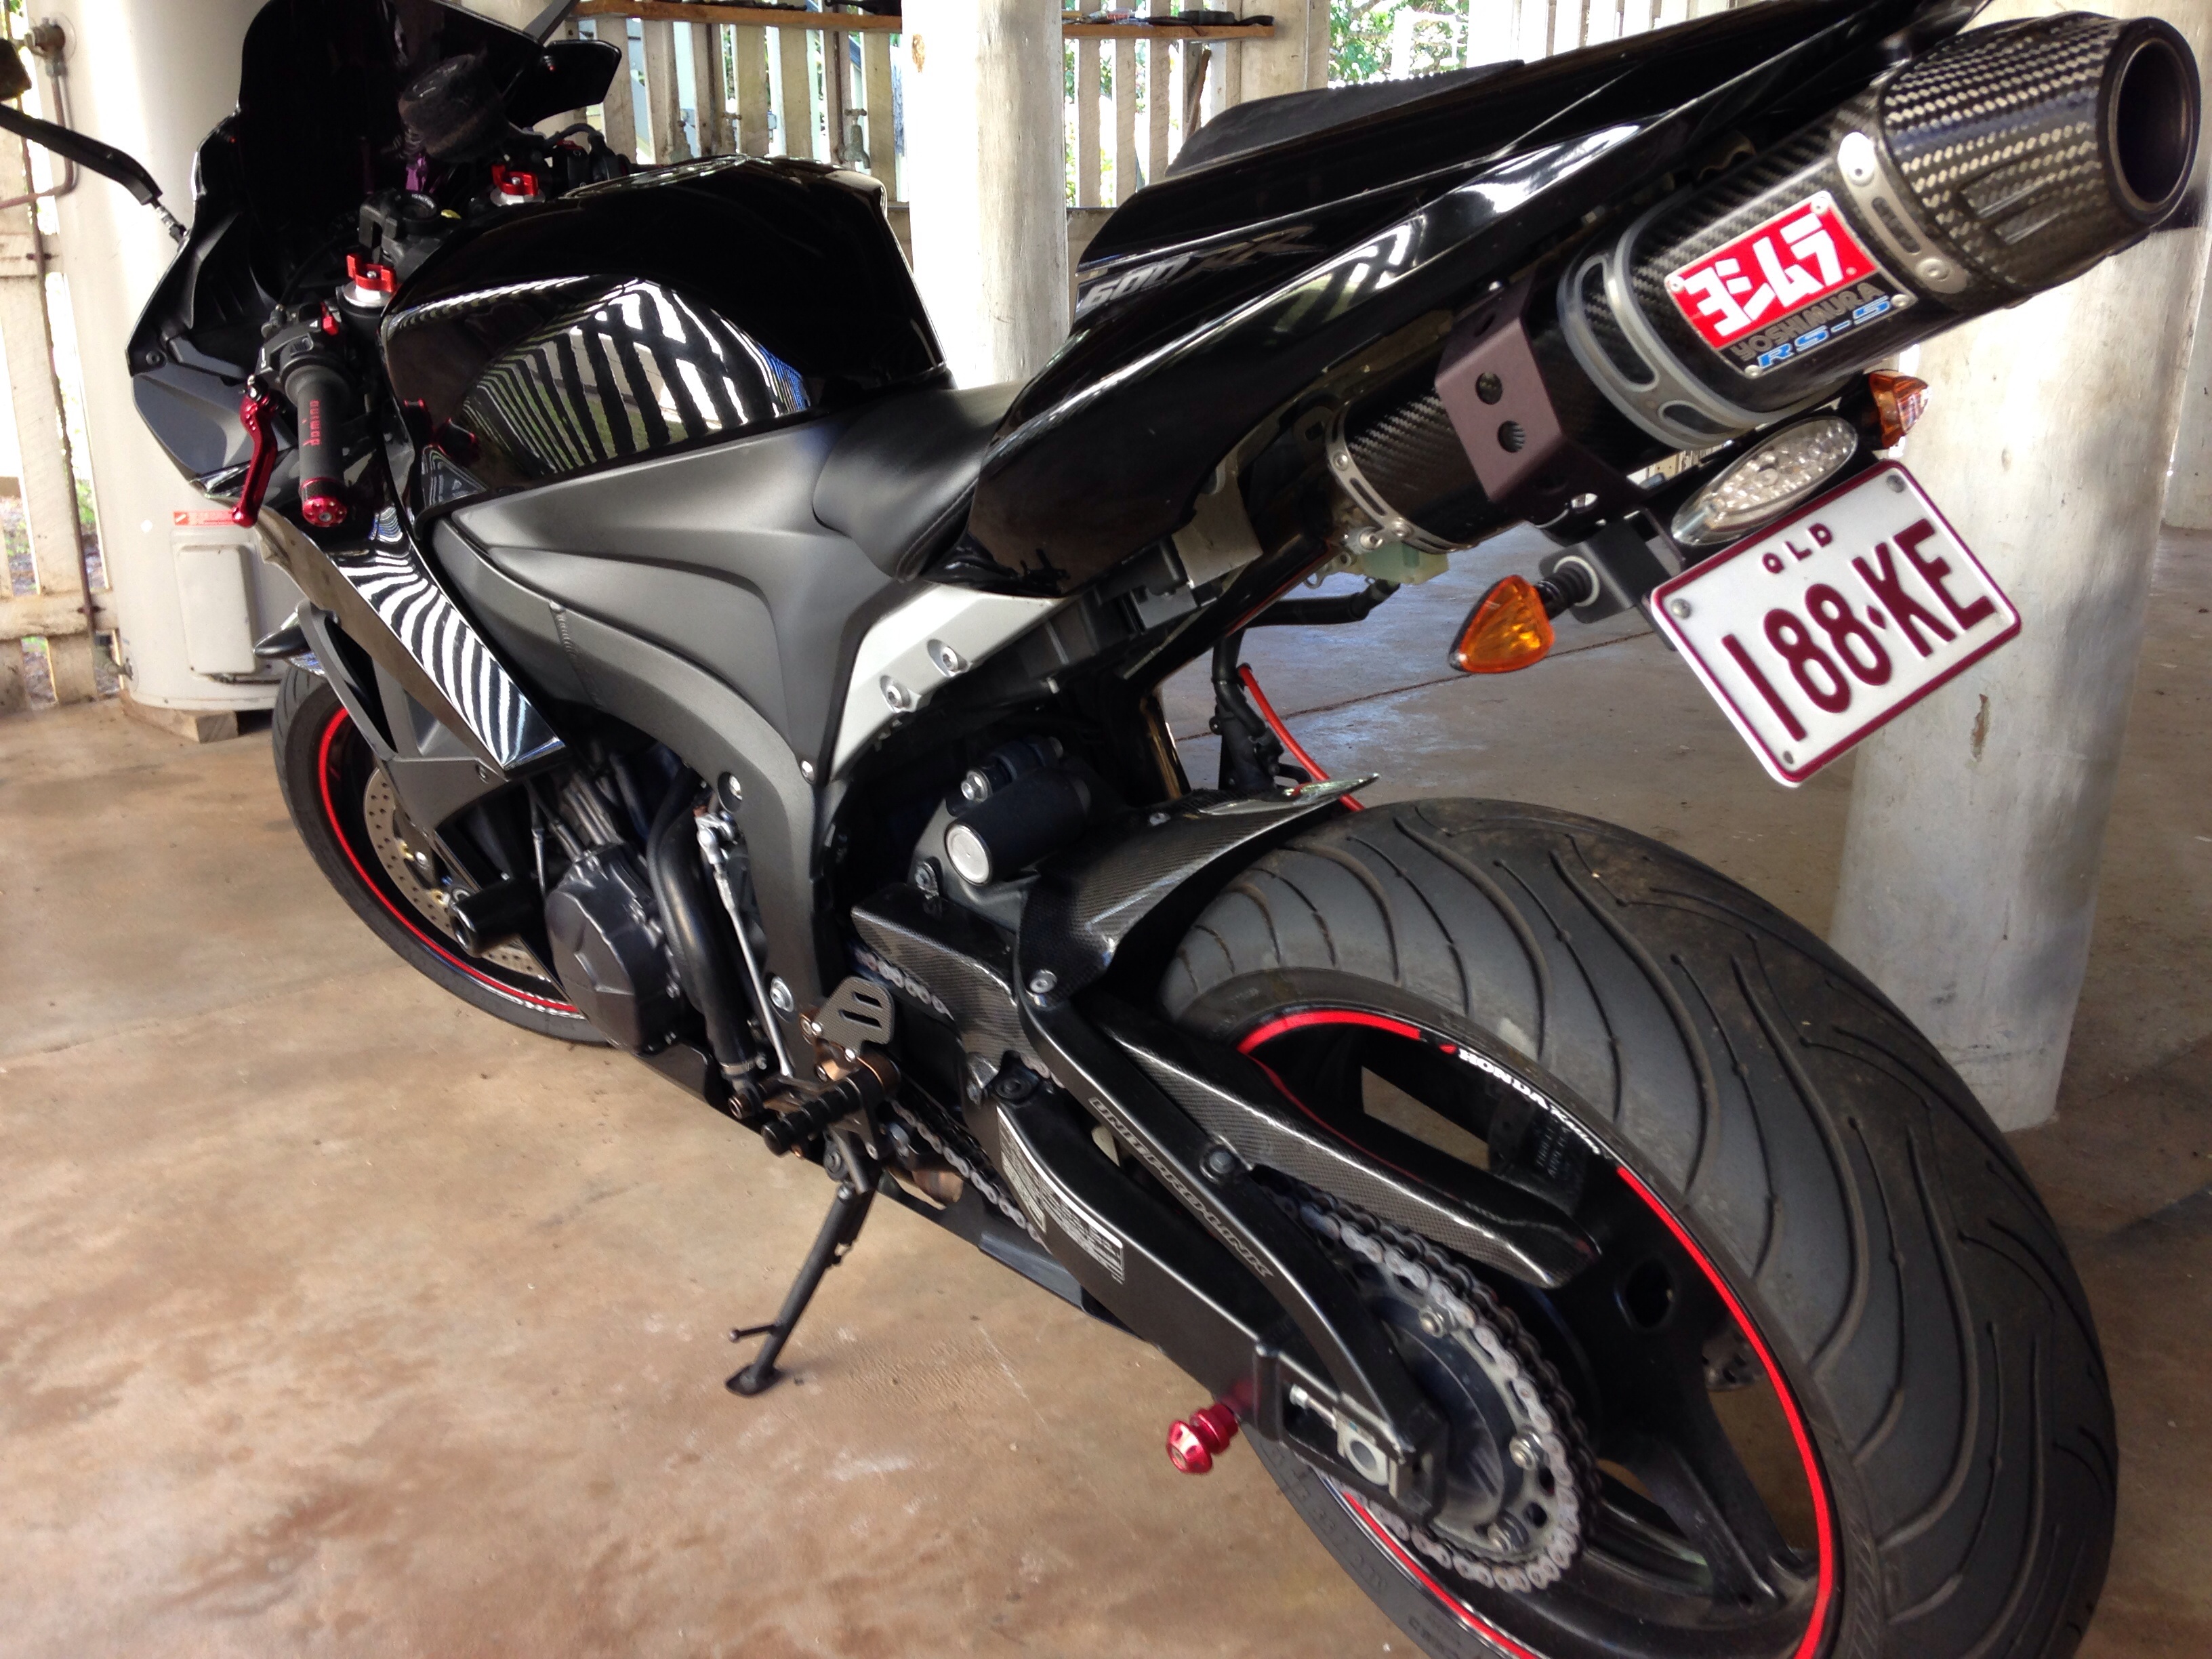 Honda Cbr600rr Motorcycle 3264x2448